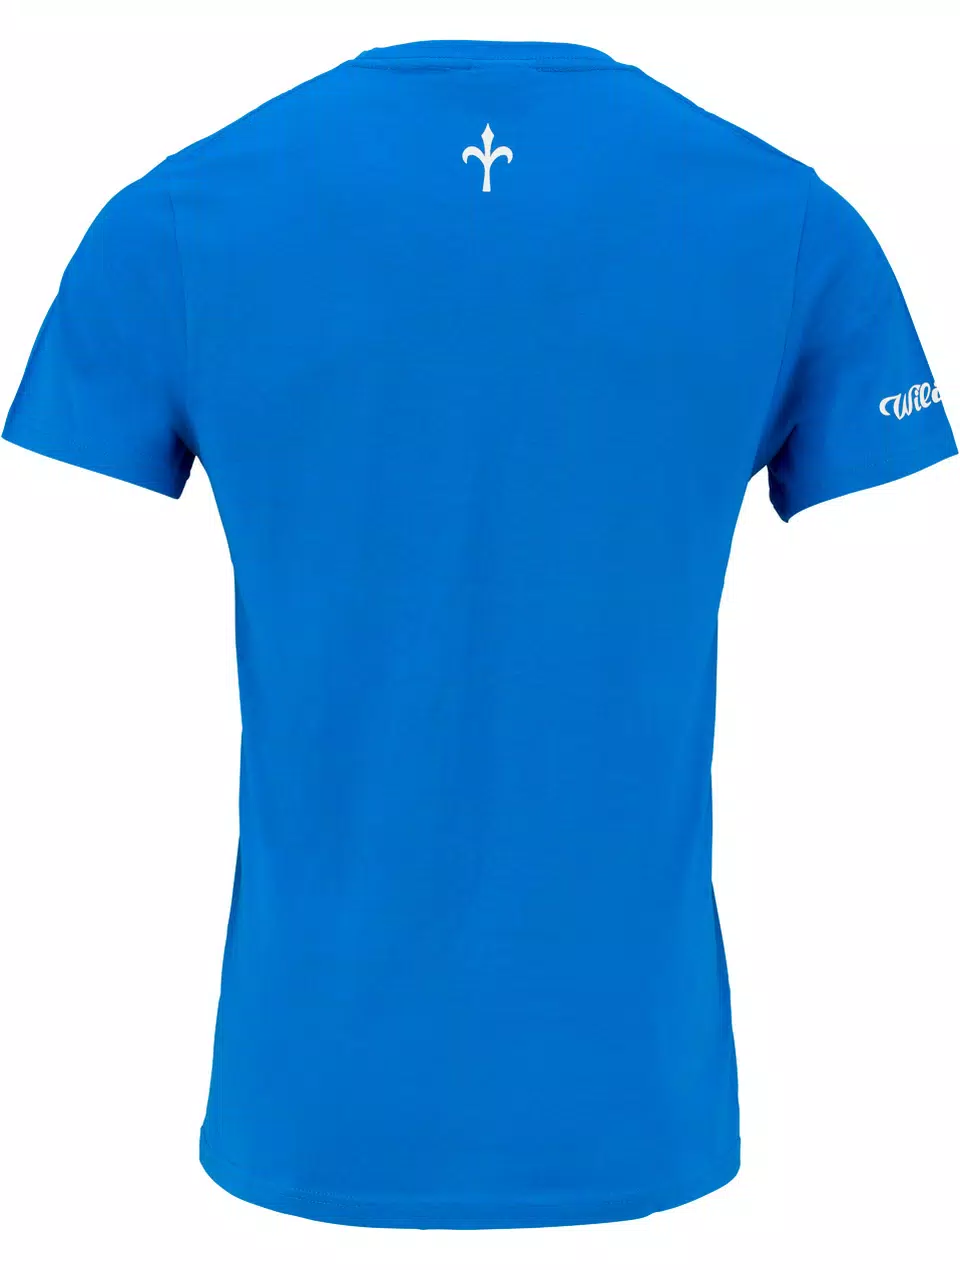 #Raisethebar T-Shirt bleu clair